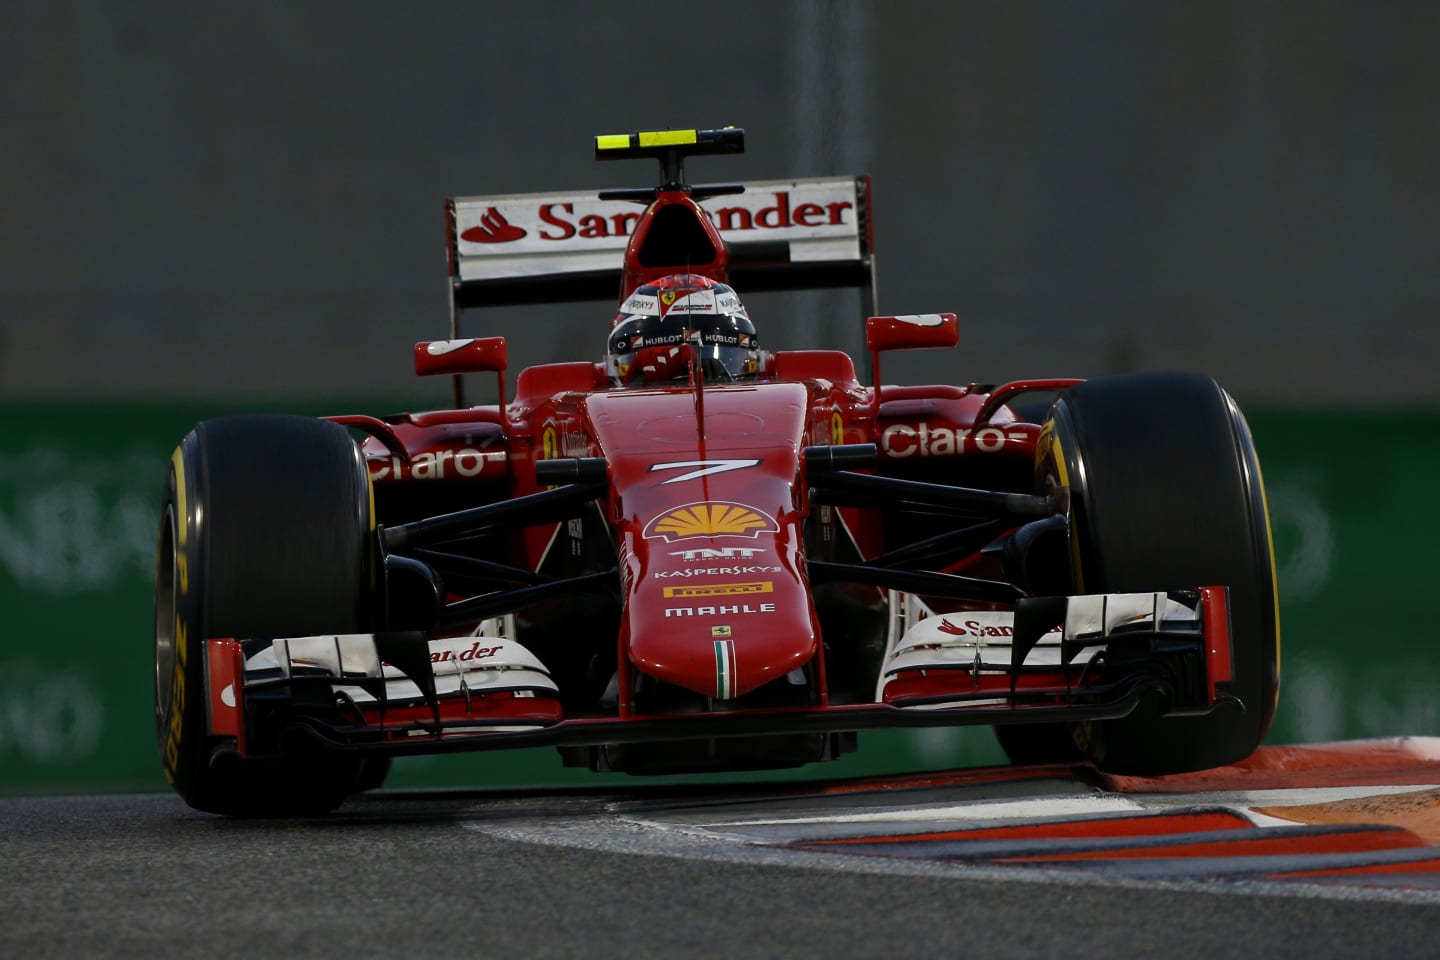 www.sutton-images.com

Kimi Raikkonen (FIN) Ferrari SF15-T at Formula One World Championship, Rd19,